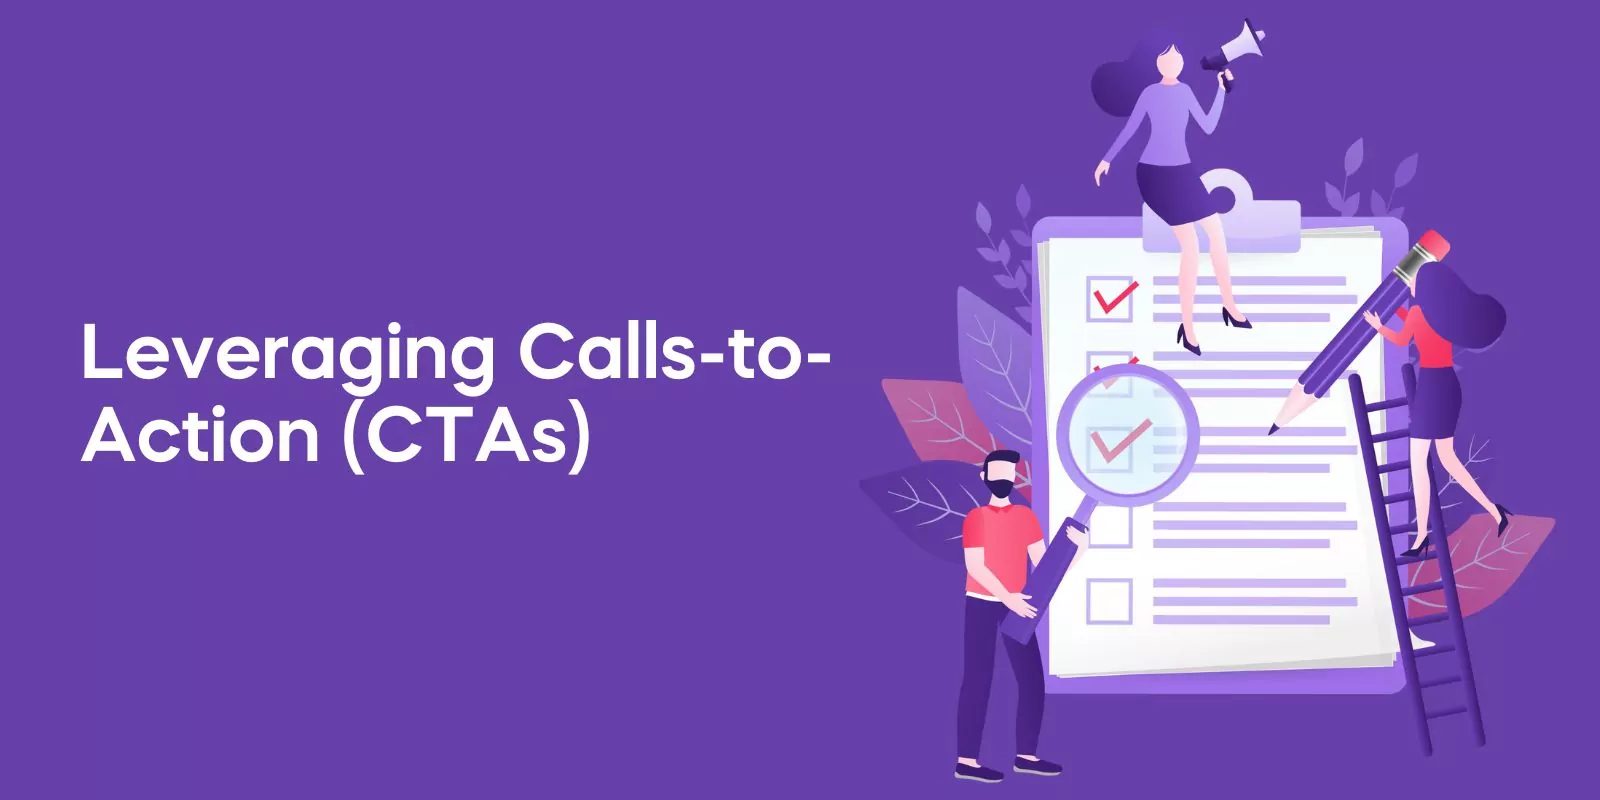 Leveraging Calls-to-Action (CTAs)